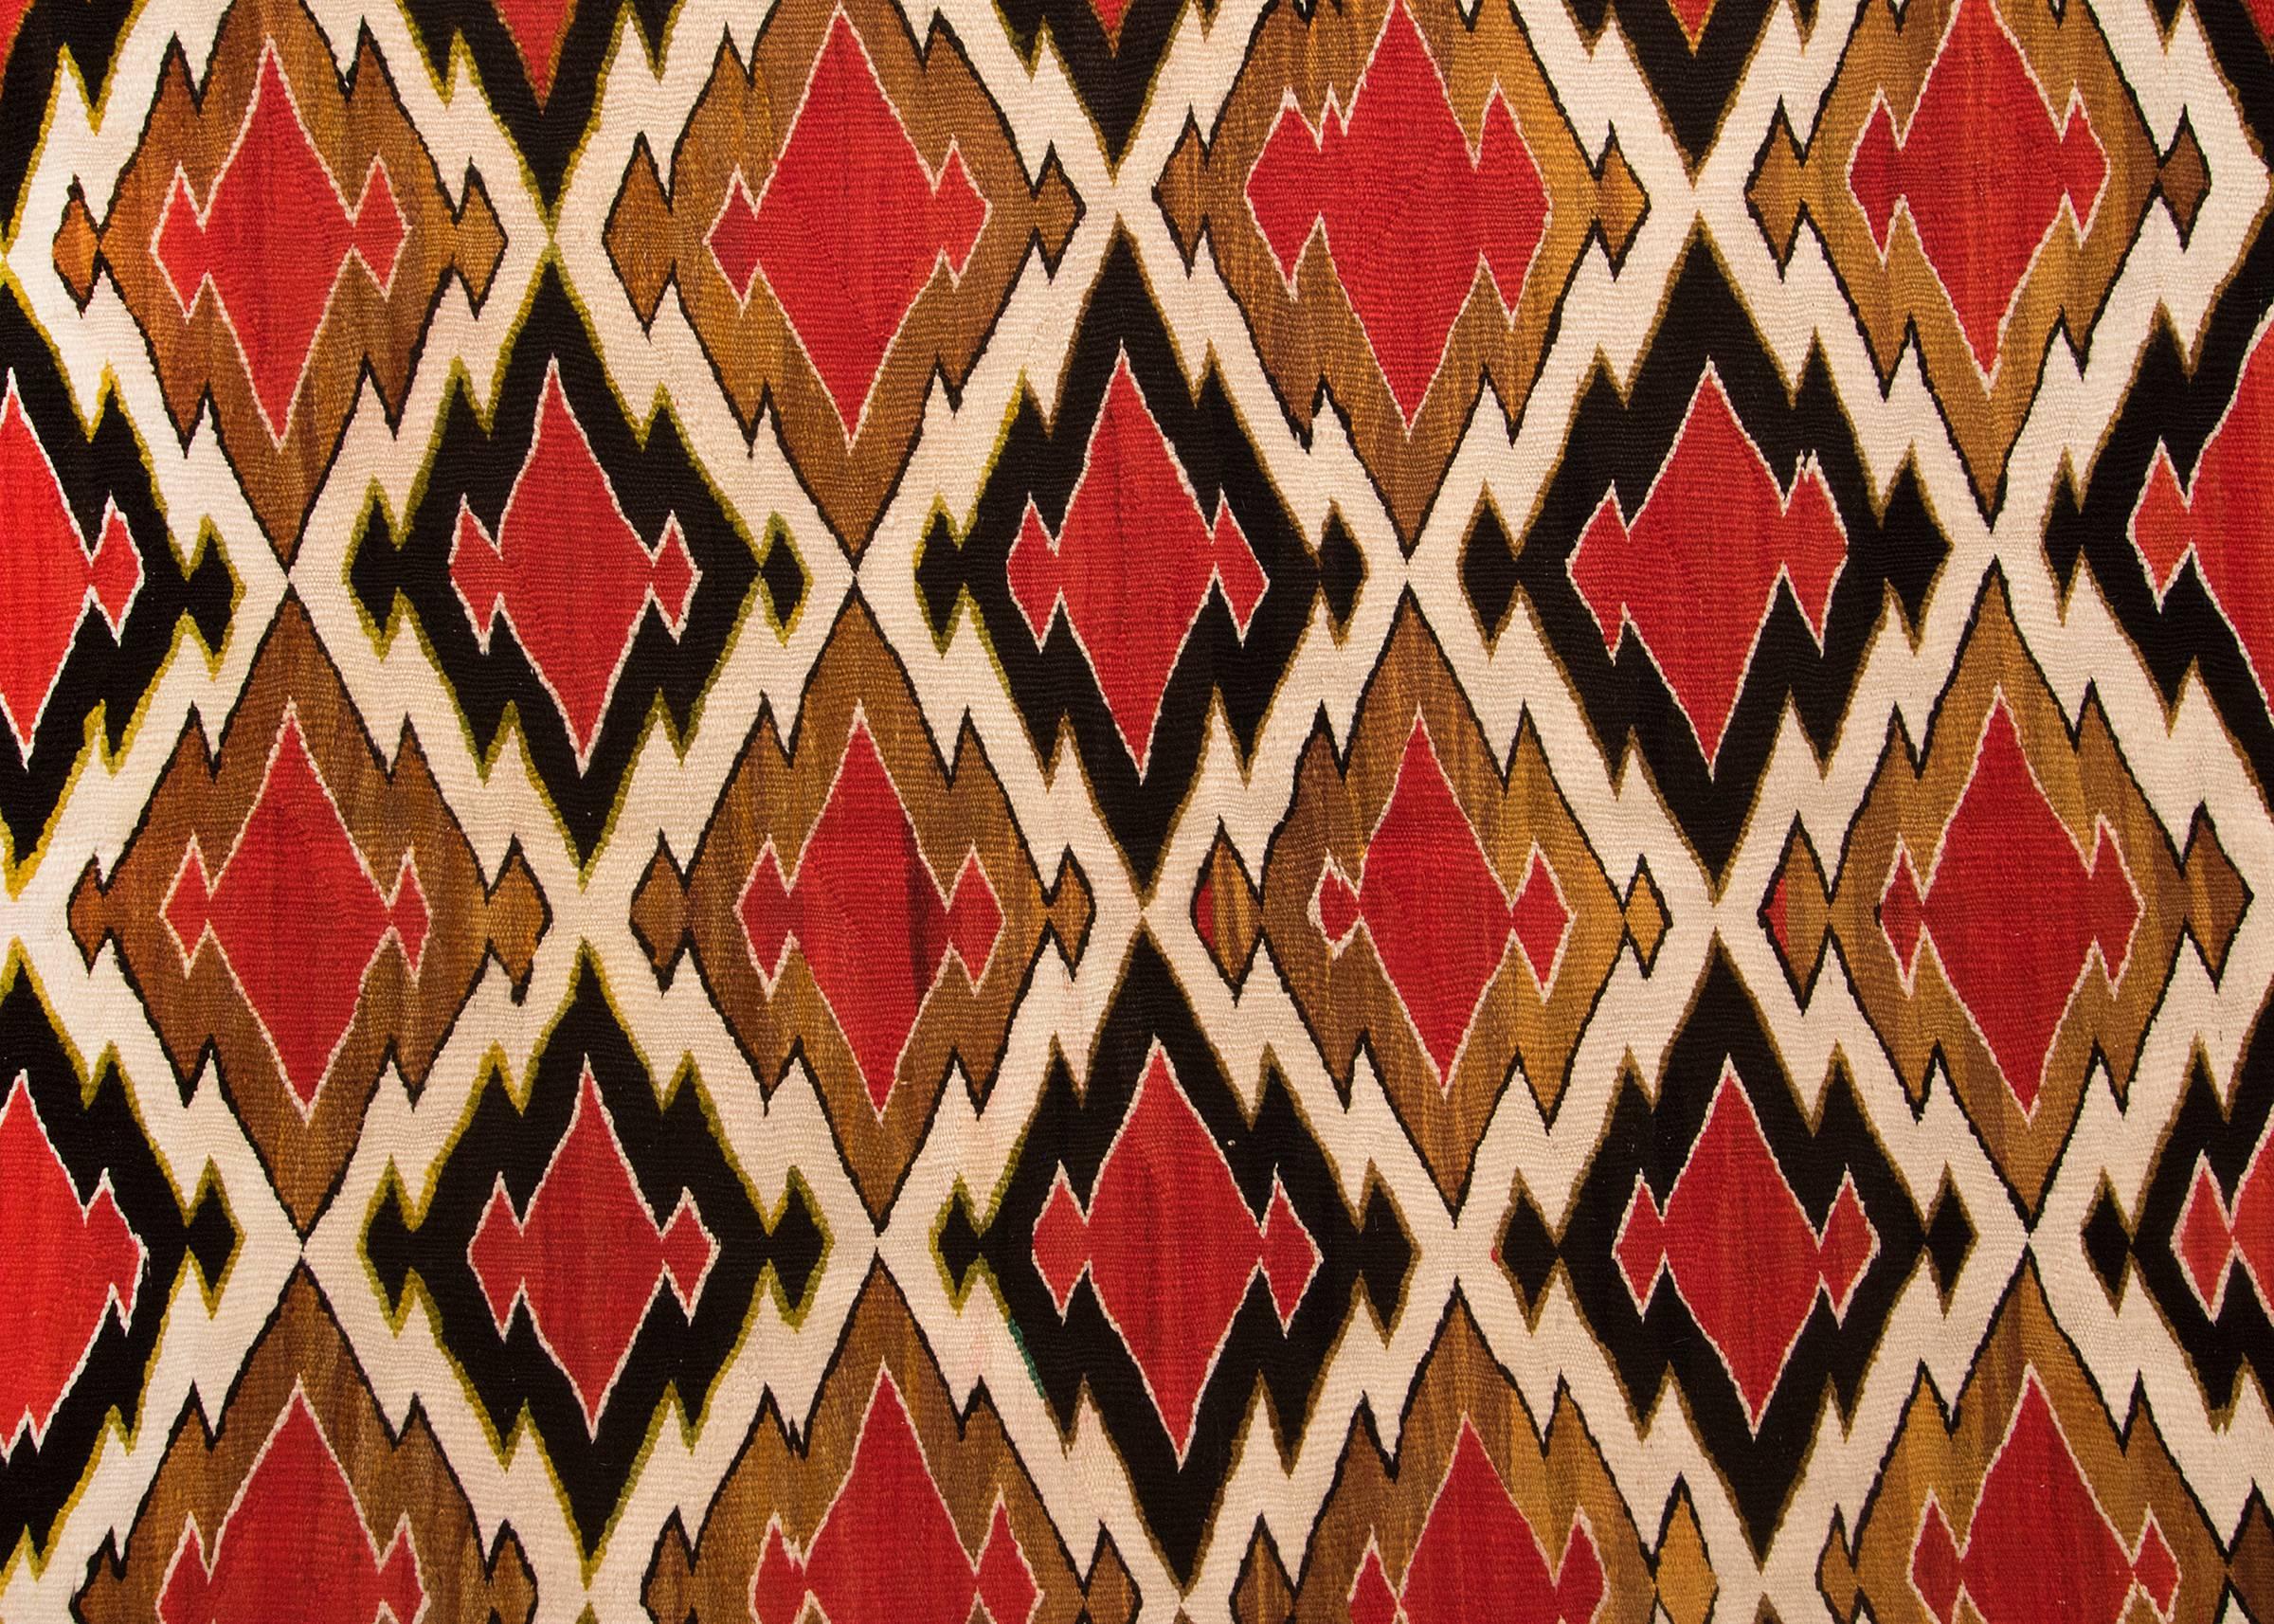 American Antique Navajo Transitional Blanket/Weaving, 19th Century